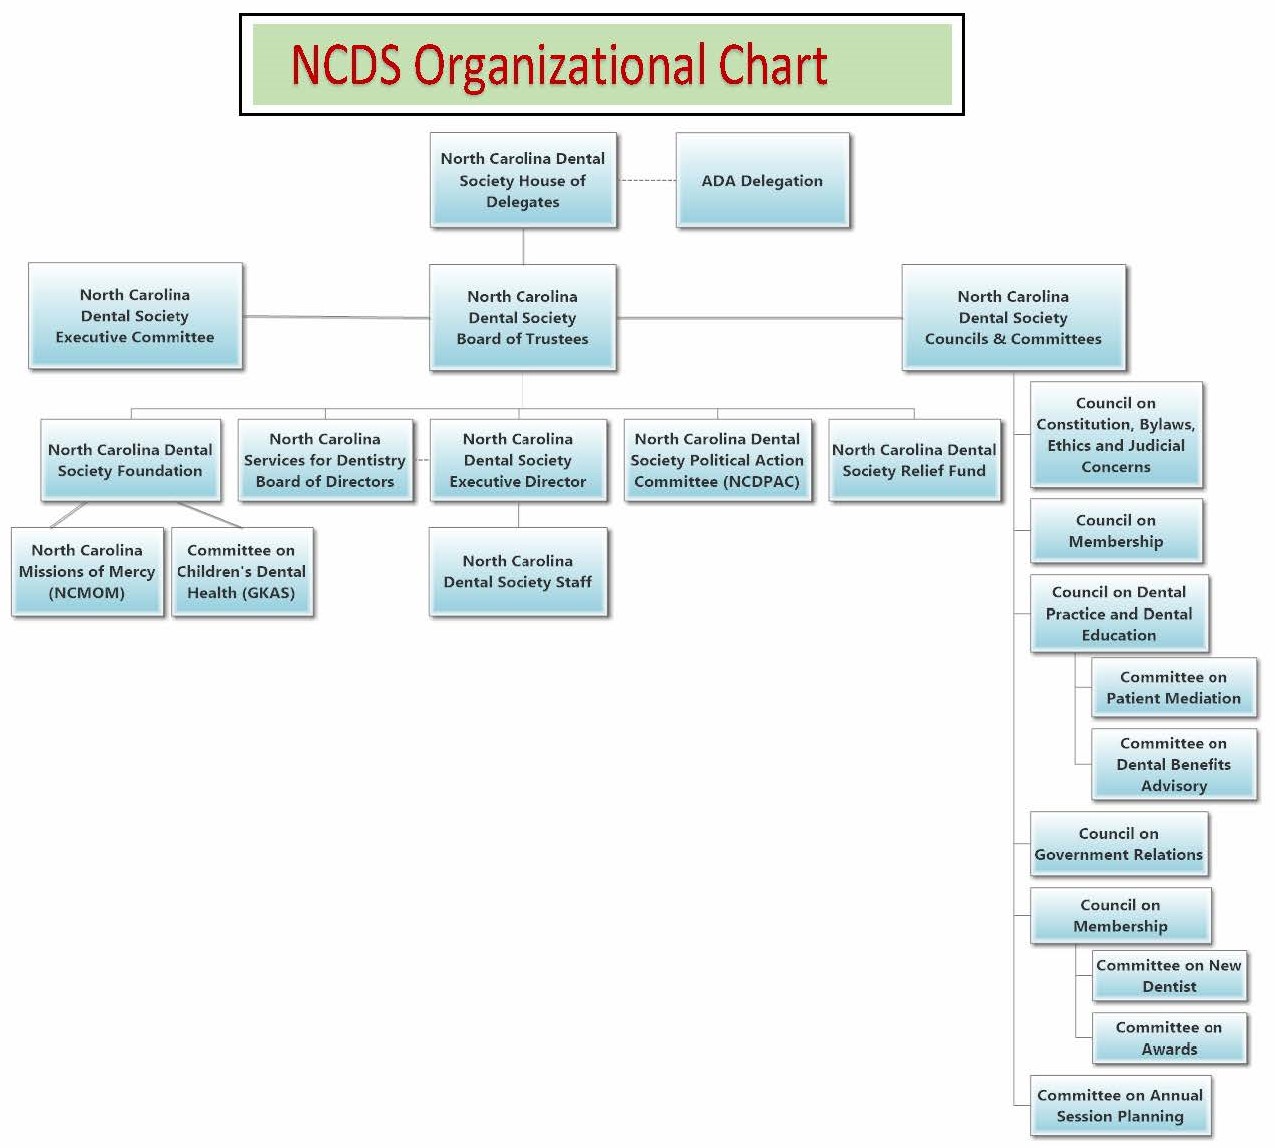 NCDS ORG CHART crop 1.7.20